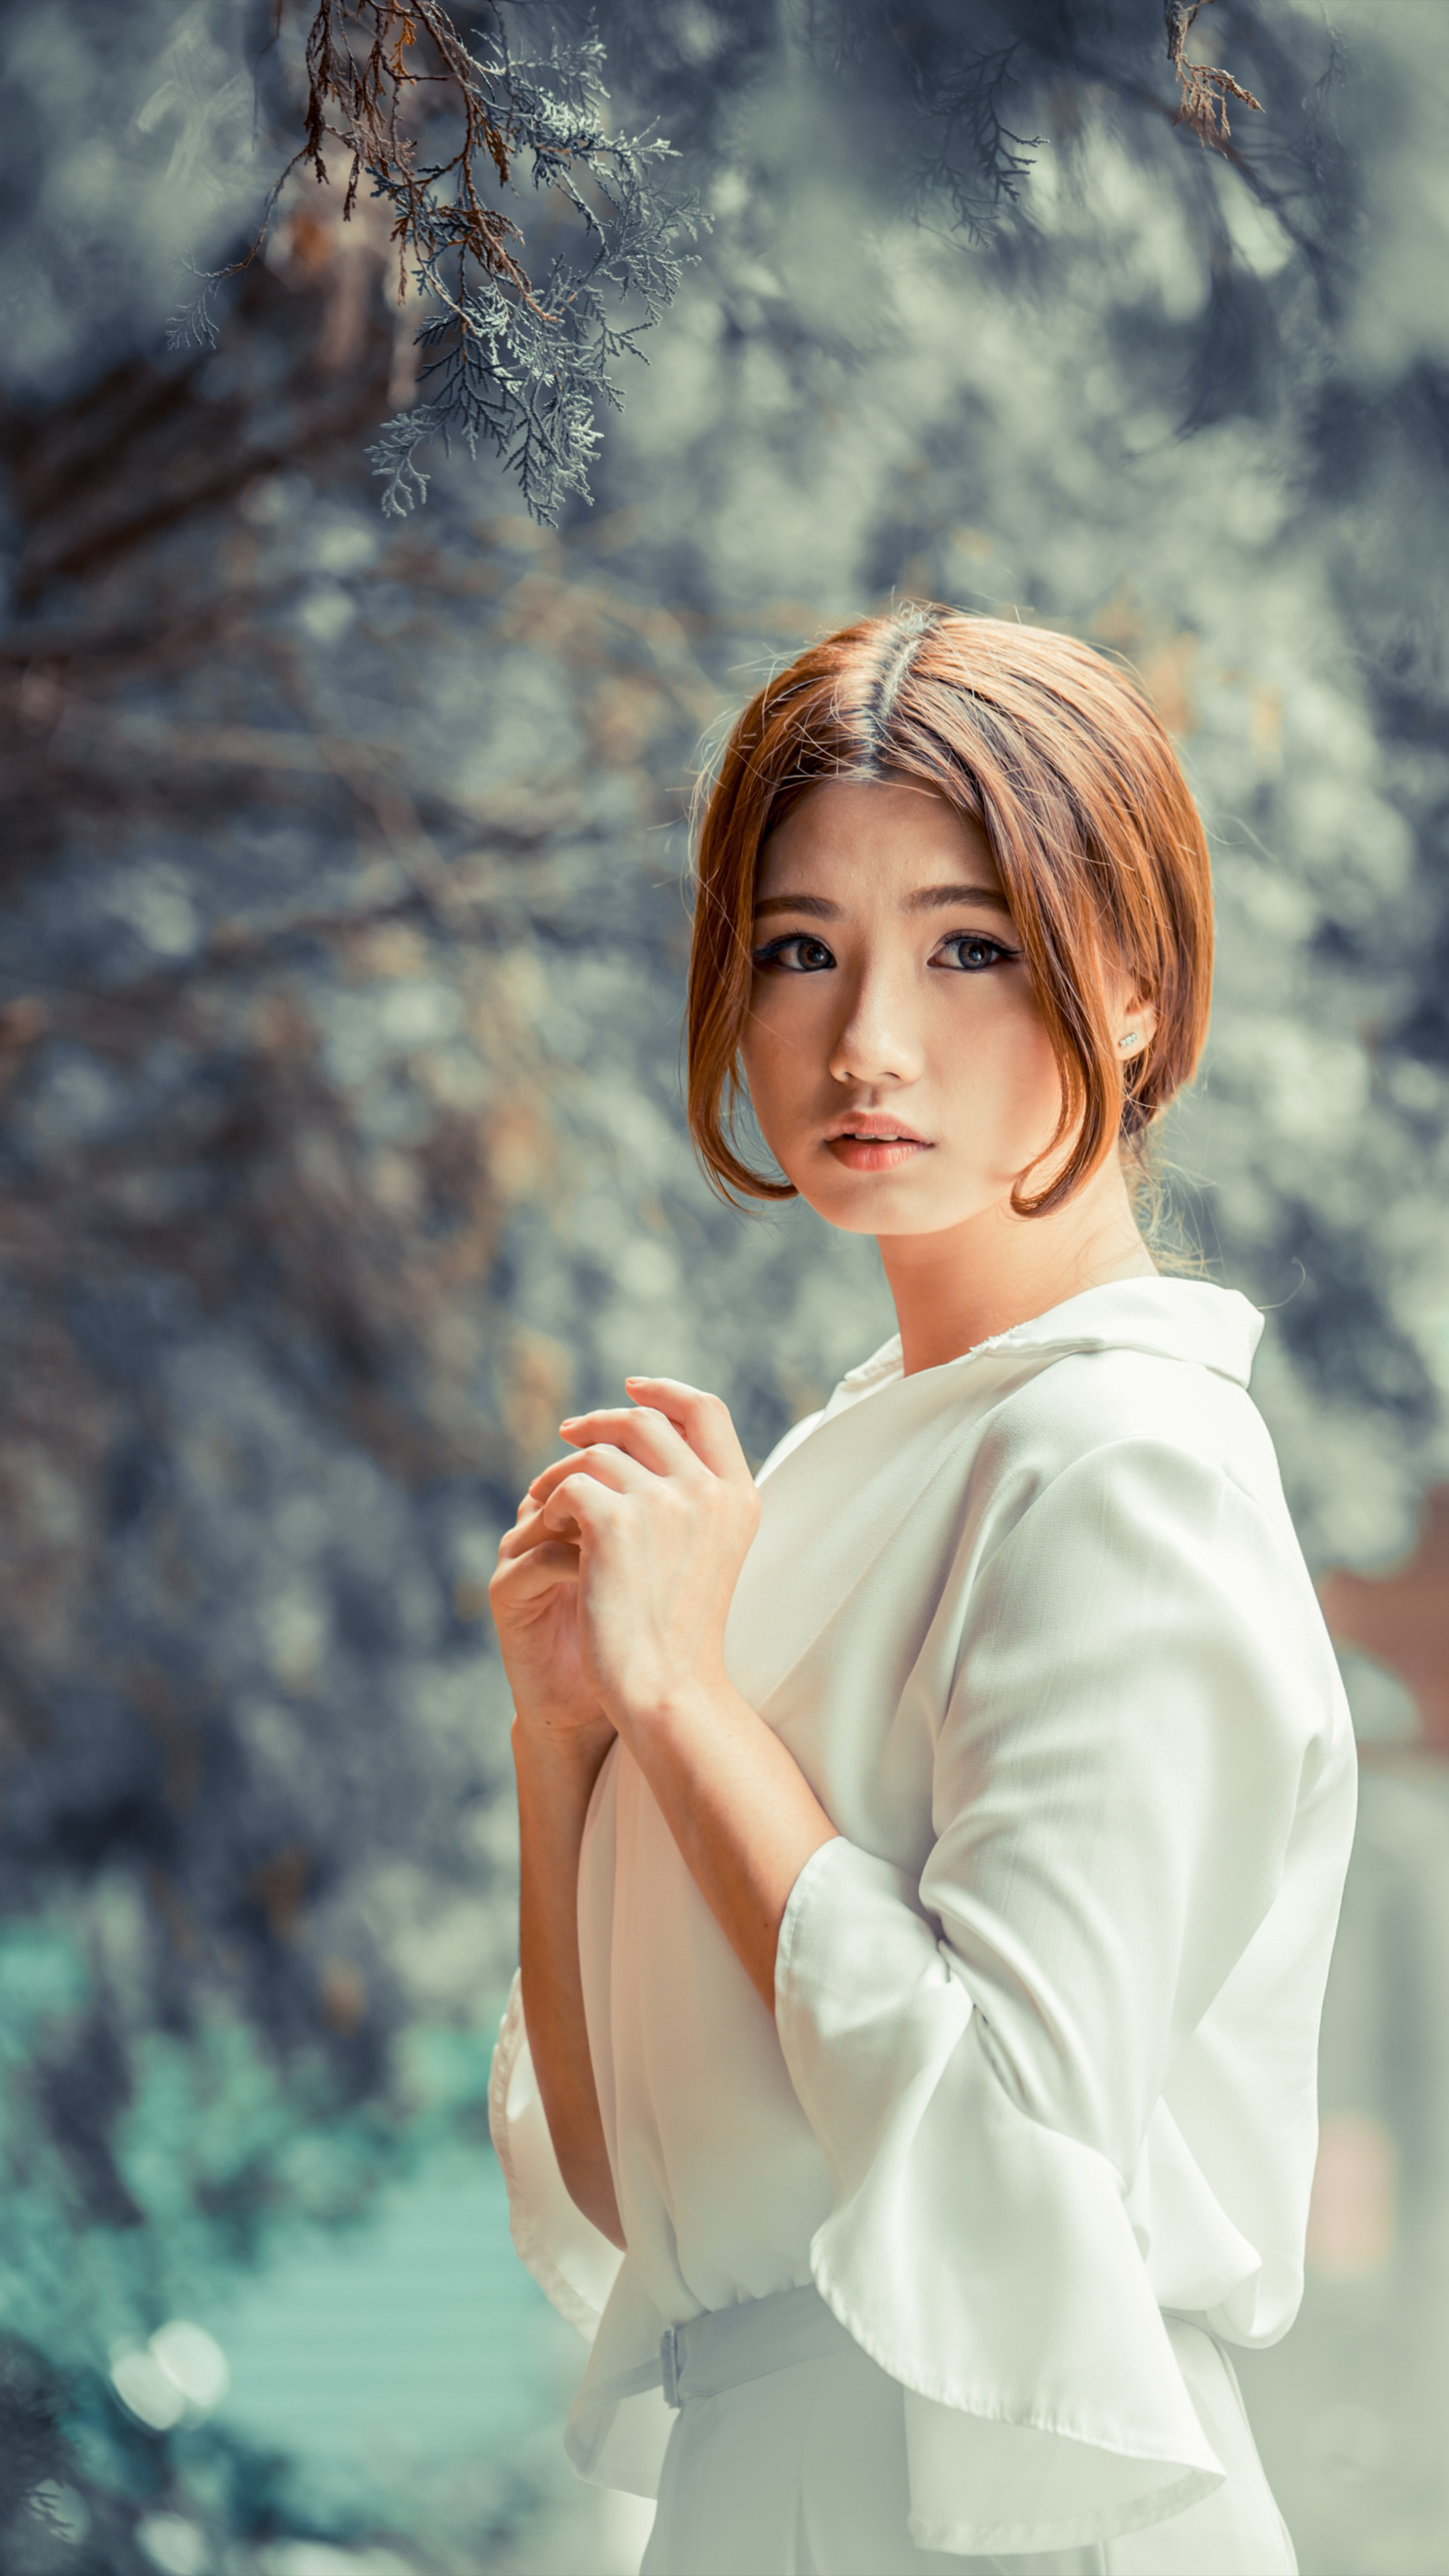 Cute Asian Girl Winter Photohoot 4K Ultra HD Mobile Wallpaper